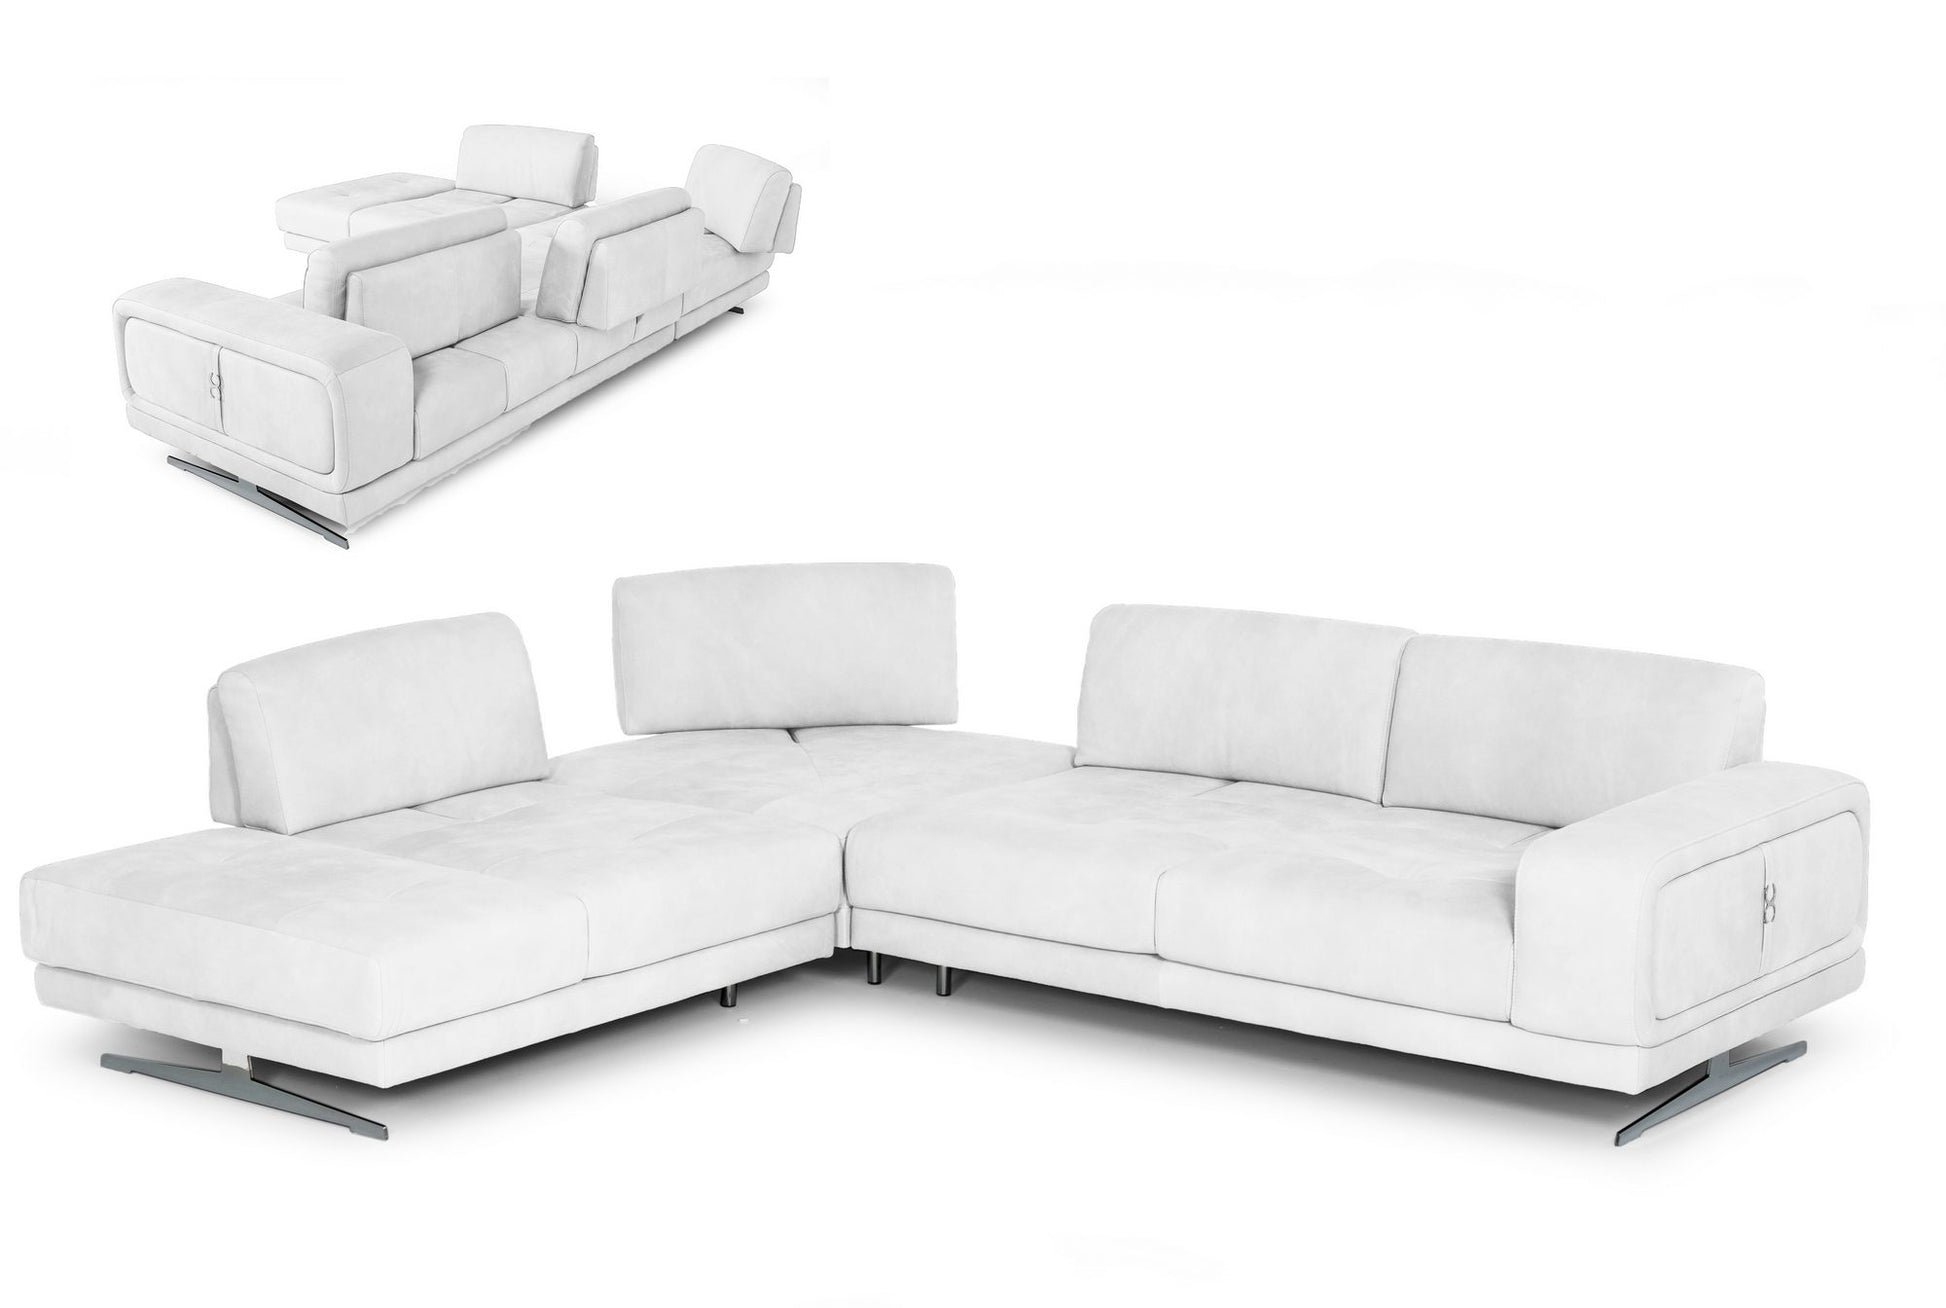 VIG Furniture Coronelli Mood Italian White Leather Left Sectional Sofa